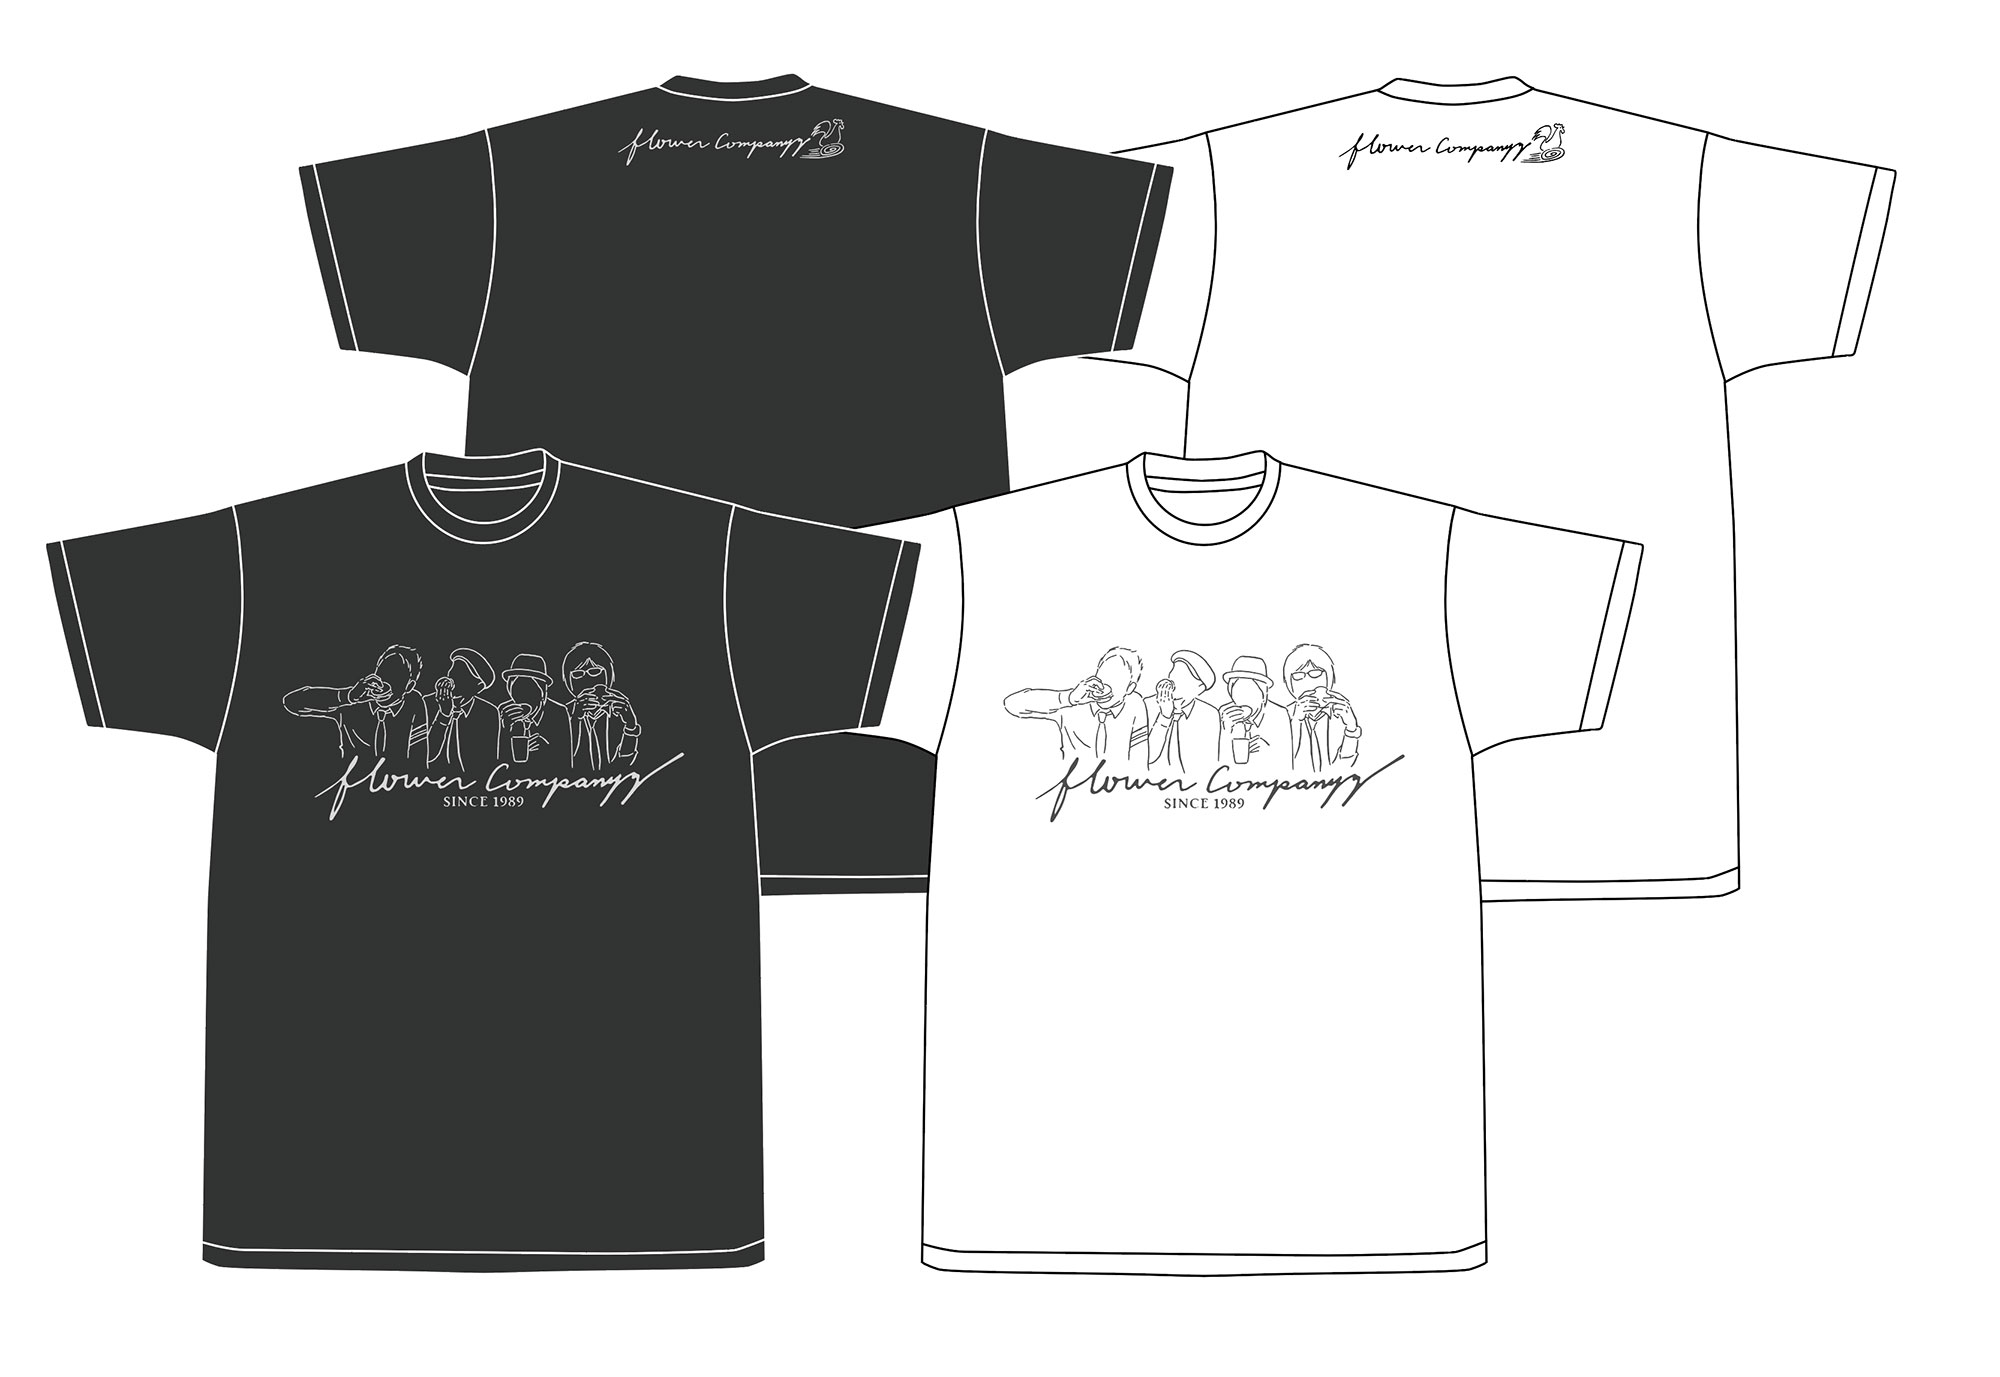 goods情報]「フラカン2019 Tシャツ」発売決定！ | フラワーカンパニーズ | OFFICIAL WEBSITE